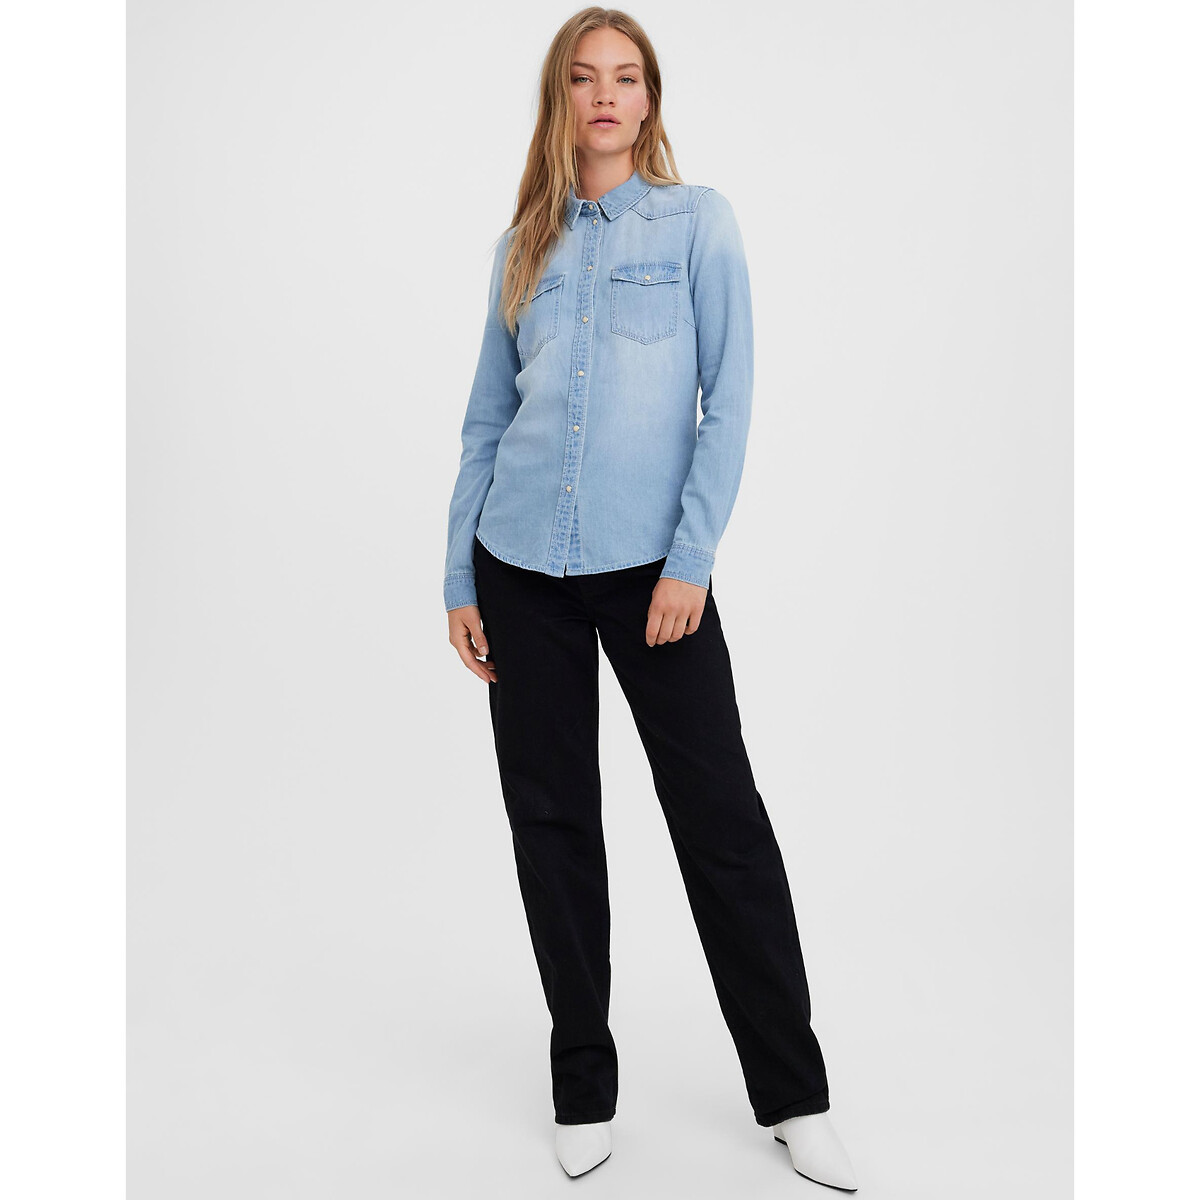 Рубашка Из джинсовой ткани XL синий LaRedoute, размер XL - фото 2